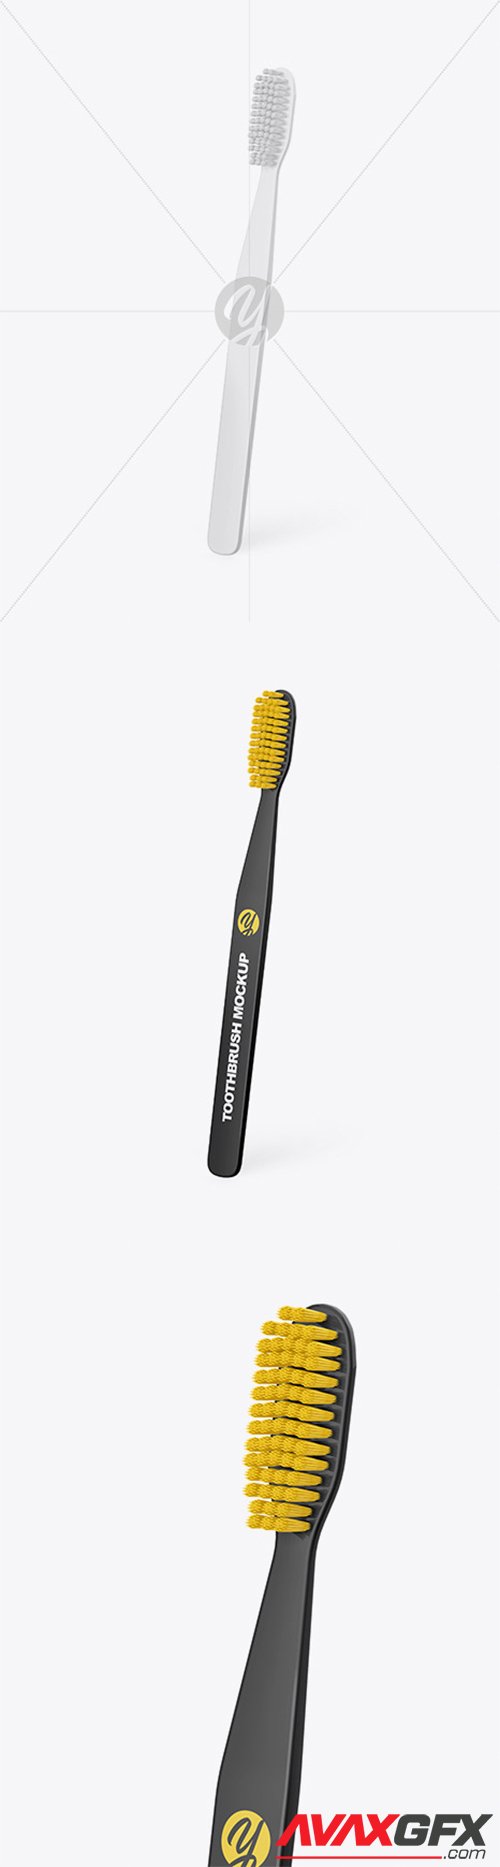 Toothbrush Mockup 60616